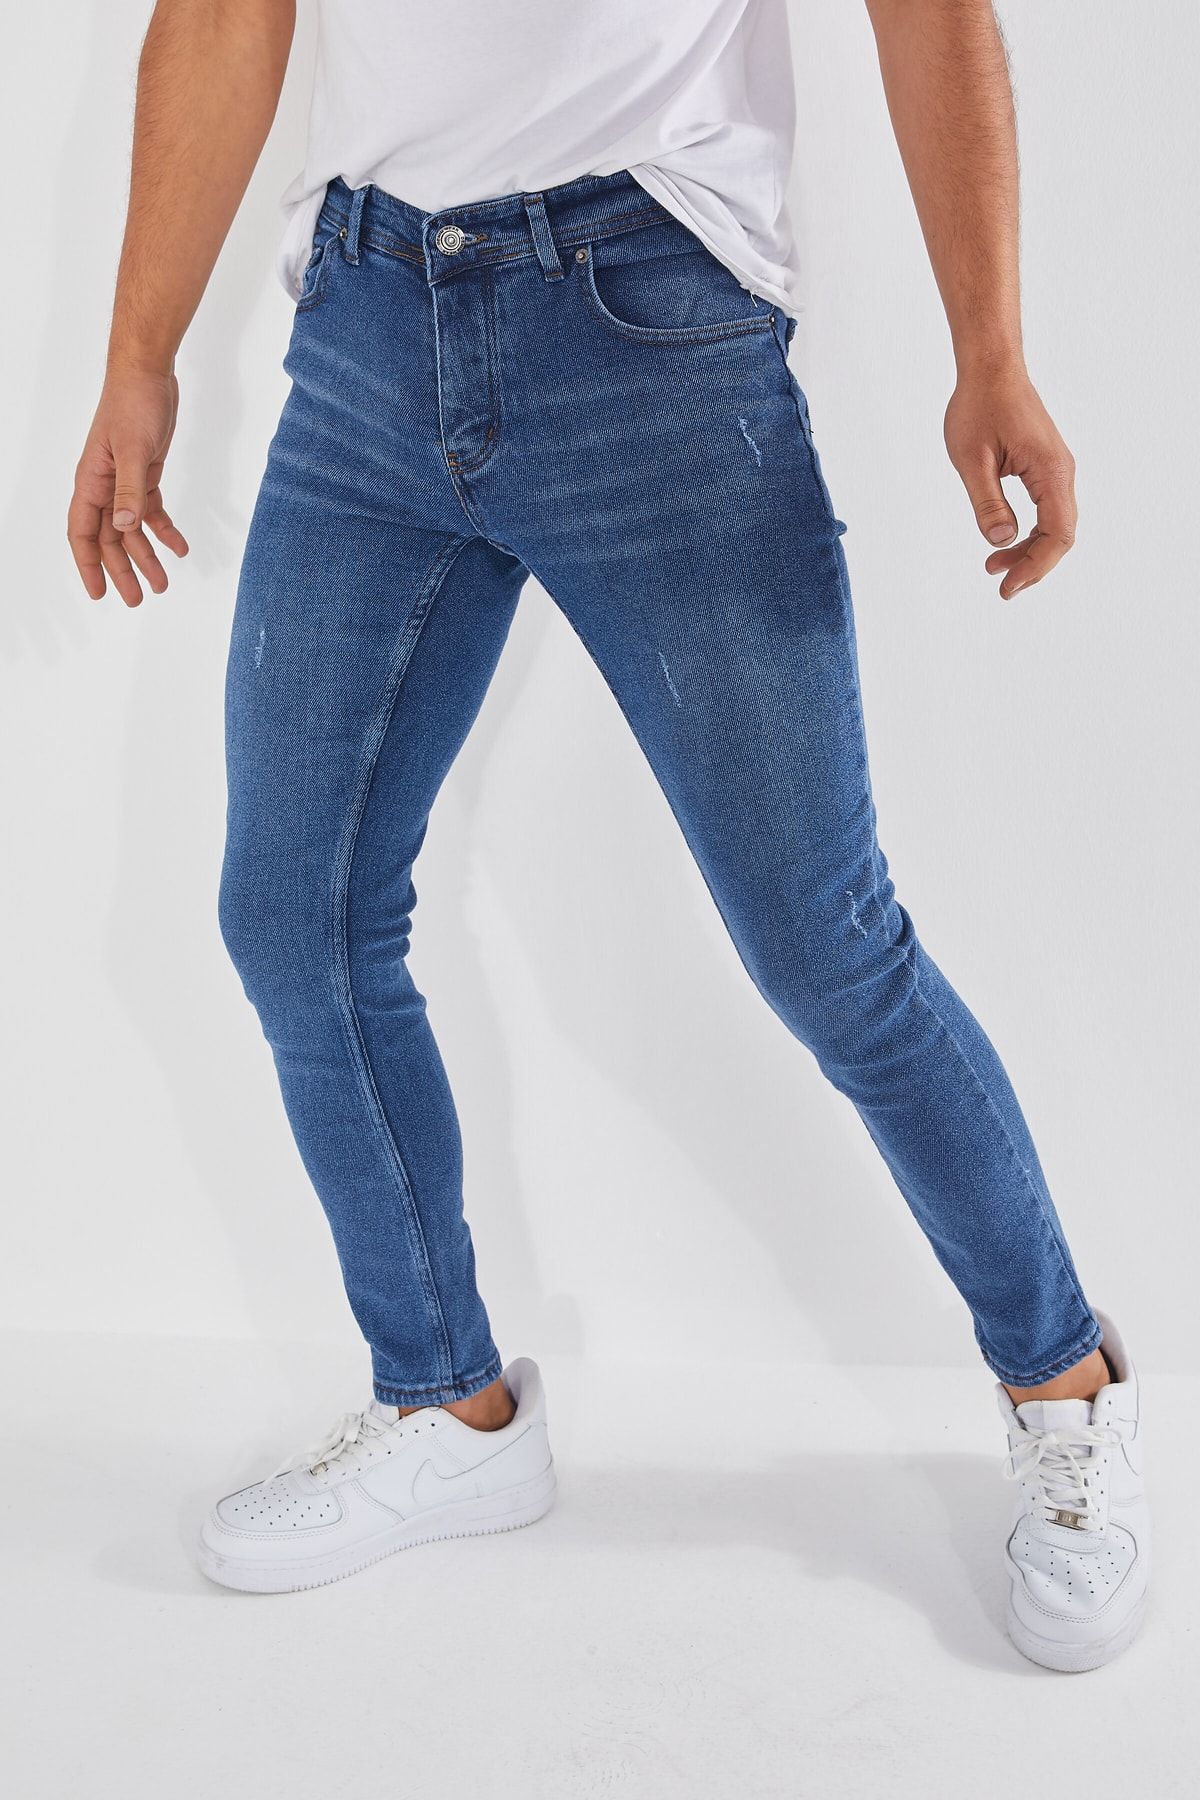 Dr Dnm Remix Erkek Jeans Skinny Fit Likralı Tırnaklı Mavii